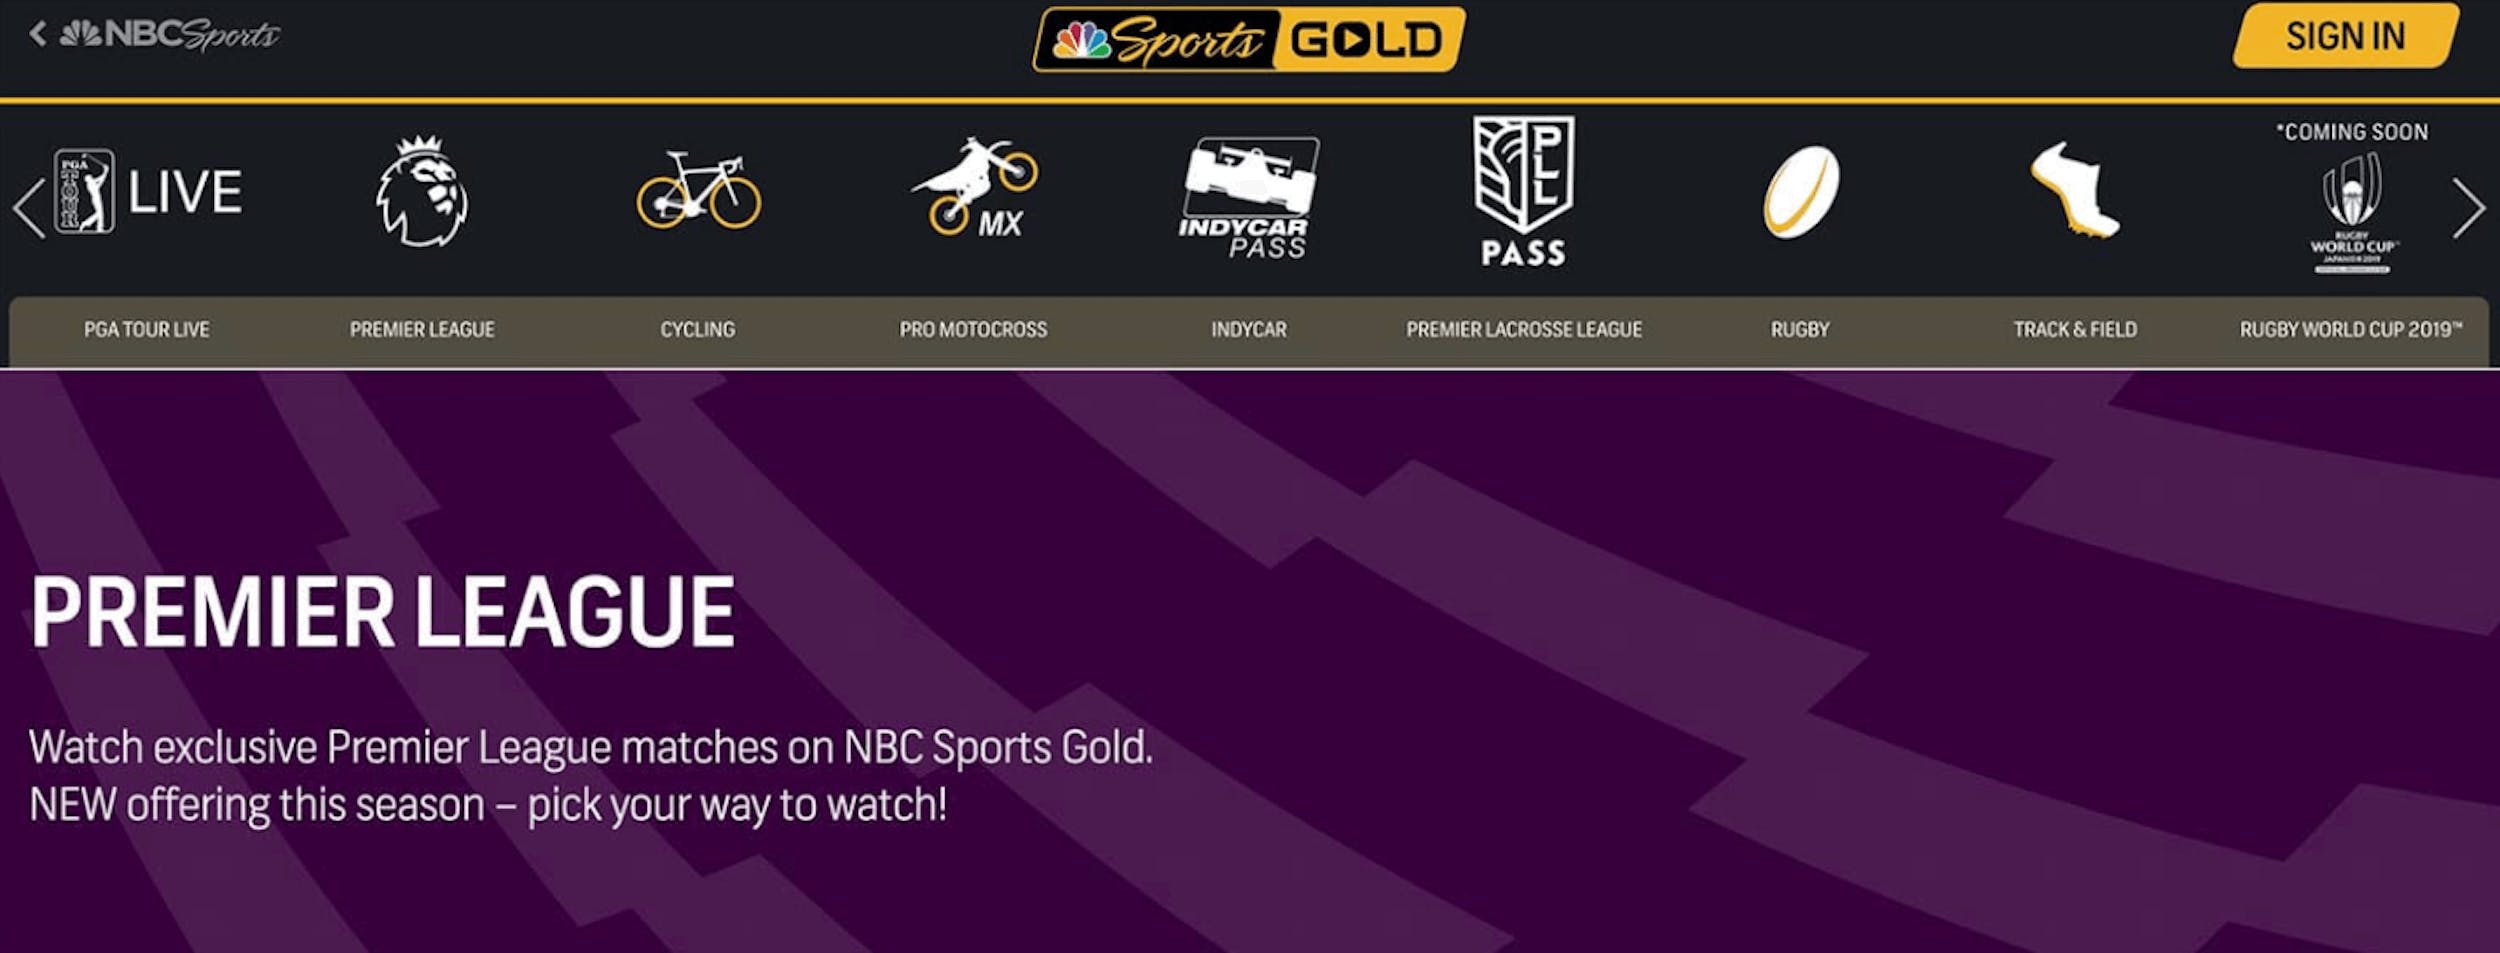 man city vs newcastle live stream nbc sports gold